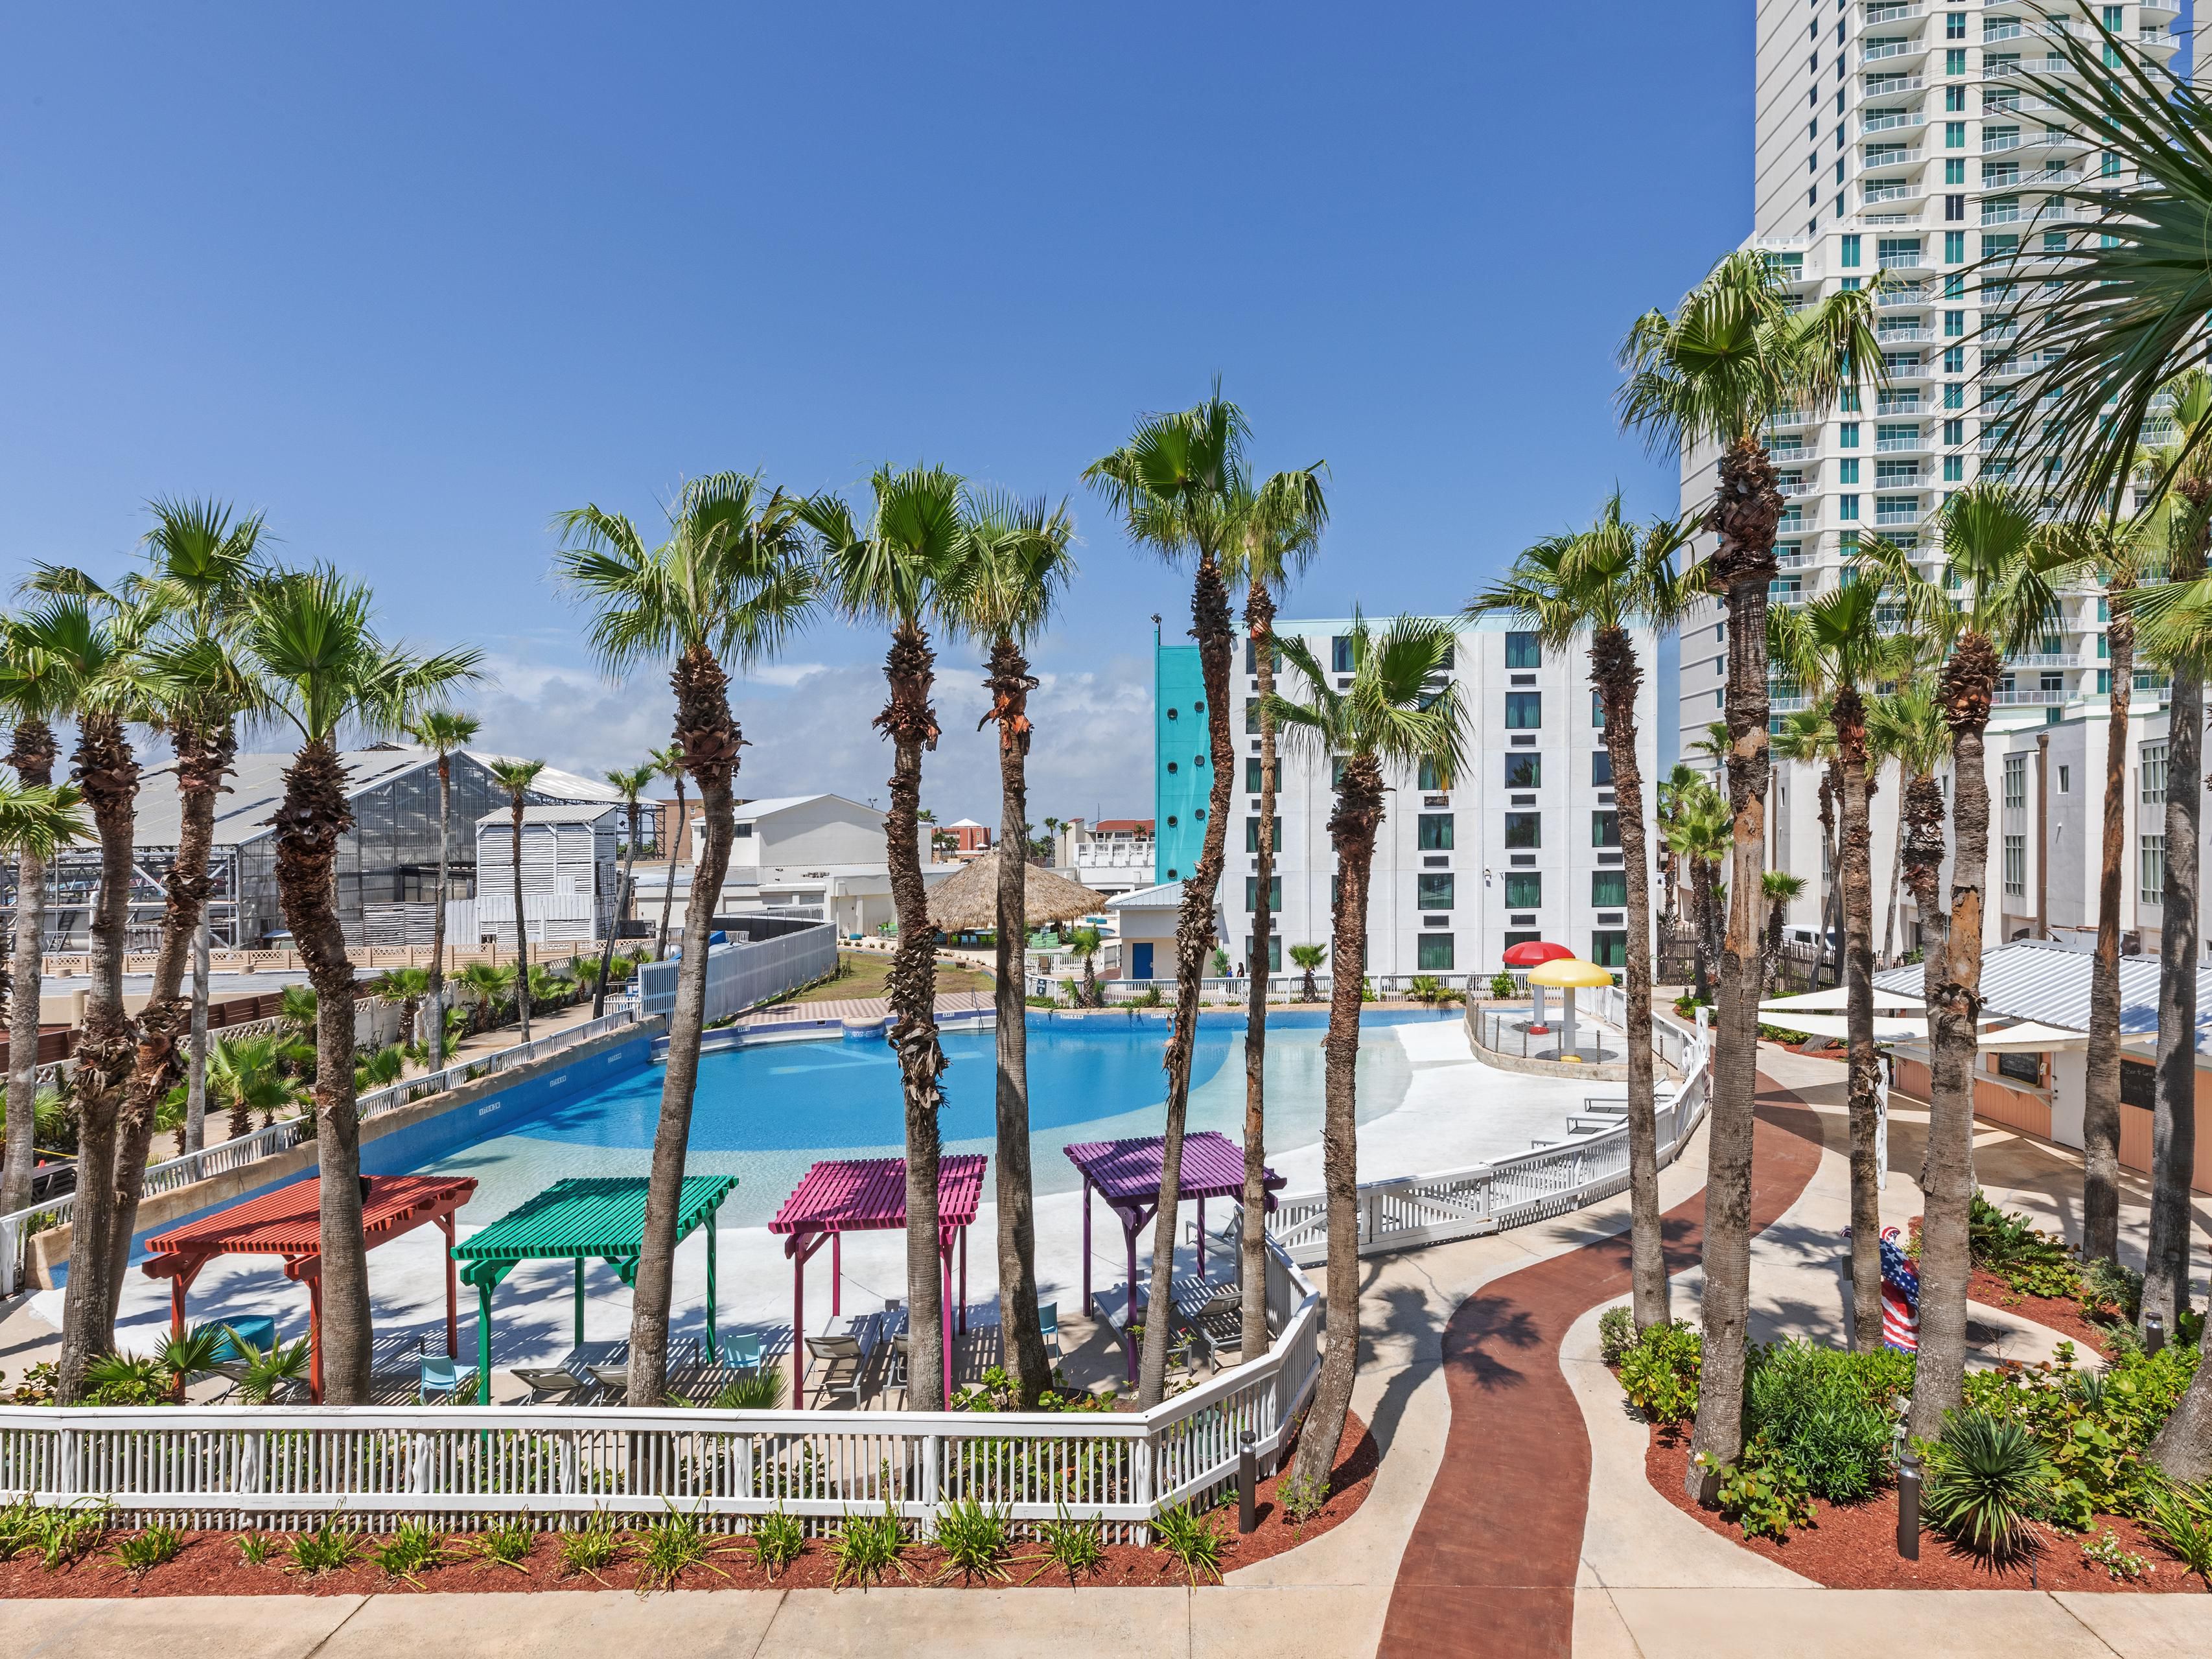 Holiday Inn Resort South Padre Island 7812680621 4x3